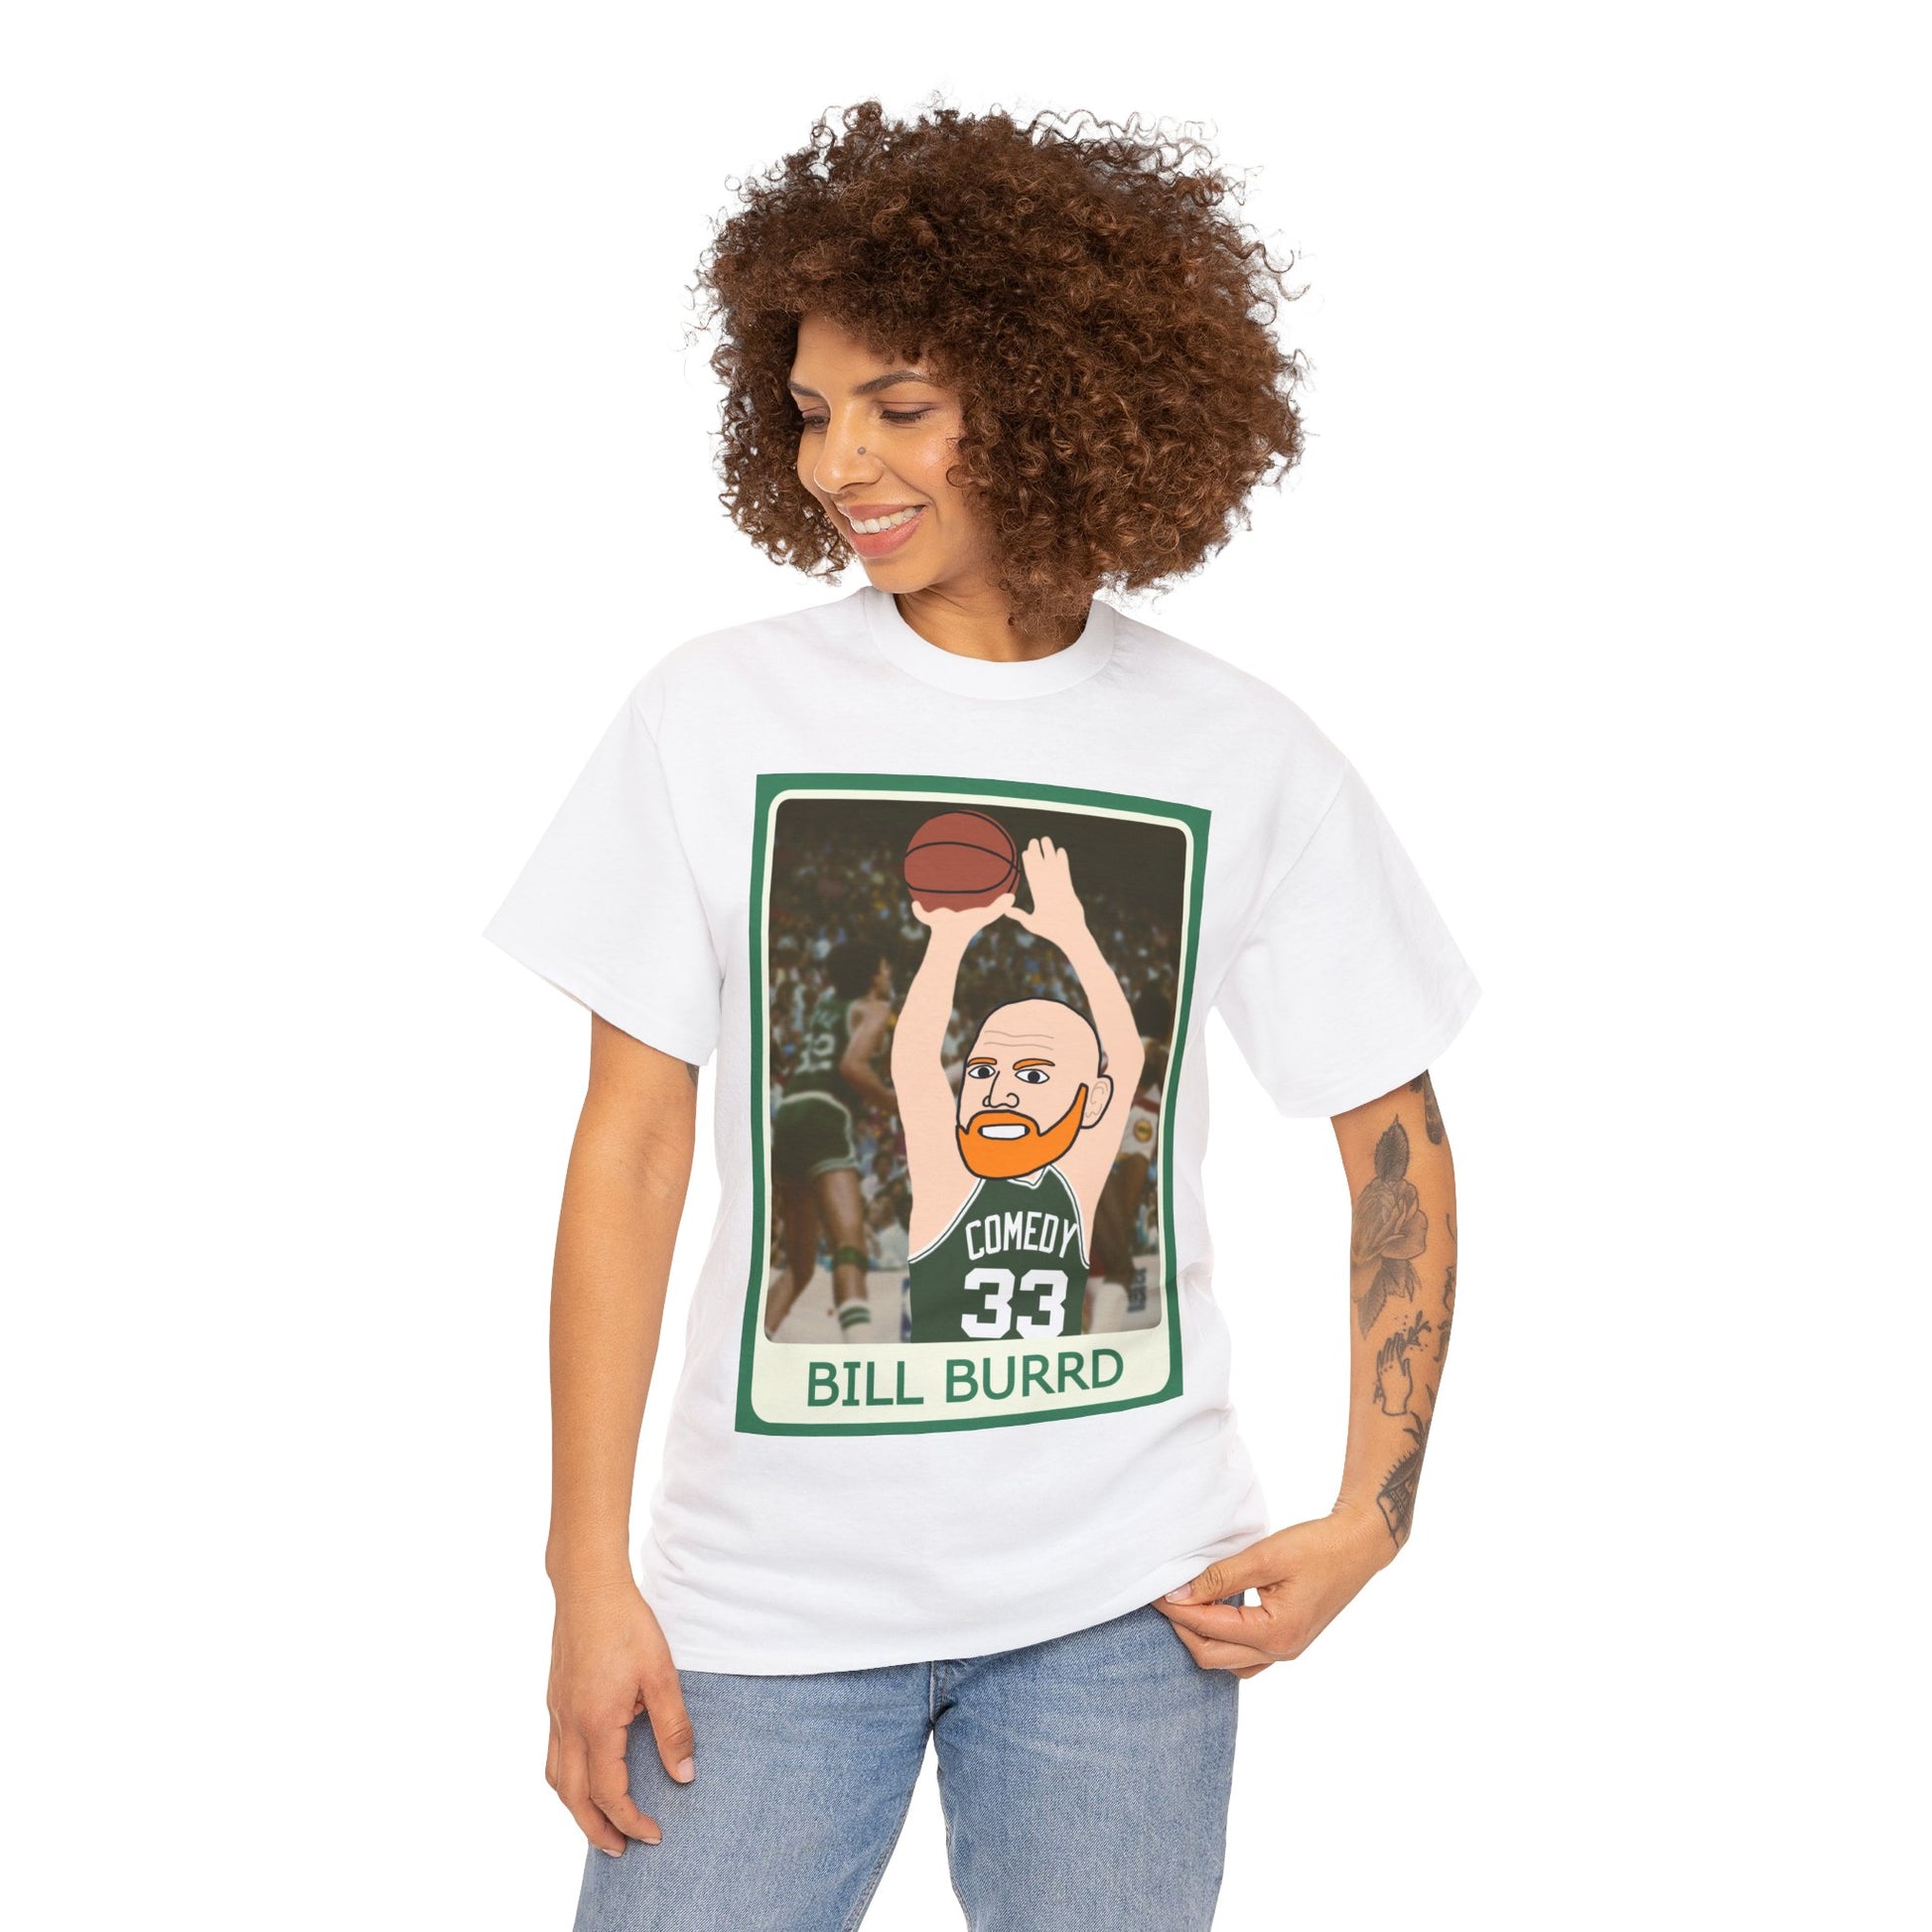 Bill Burr T-shirt Boston Celtics Tshirt Larry Bird Shirt Monday Morning Podcast Merch Podcast Gift Celtics Fan Gift Basketball Fan Gift Next Cult Brand Bill Burr, Monday Morning Podcast, Podcasts, Stand-up Comedy